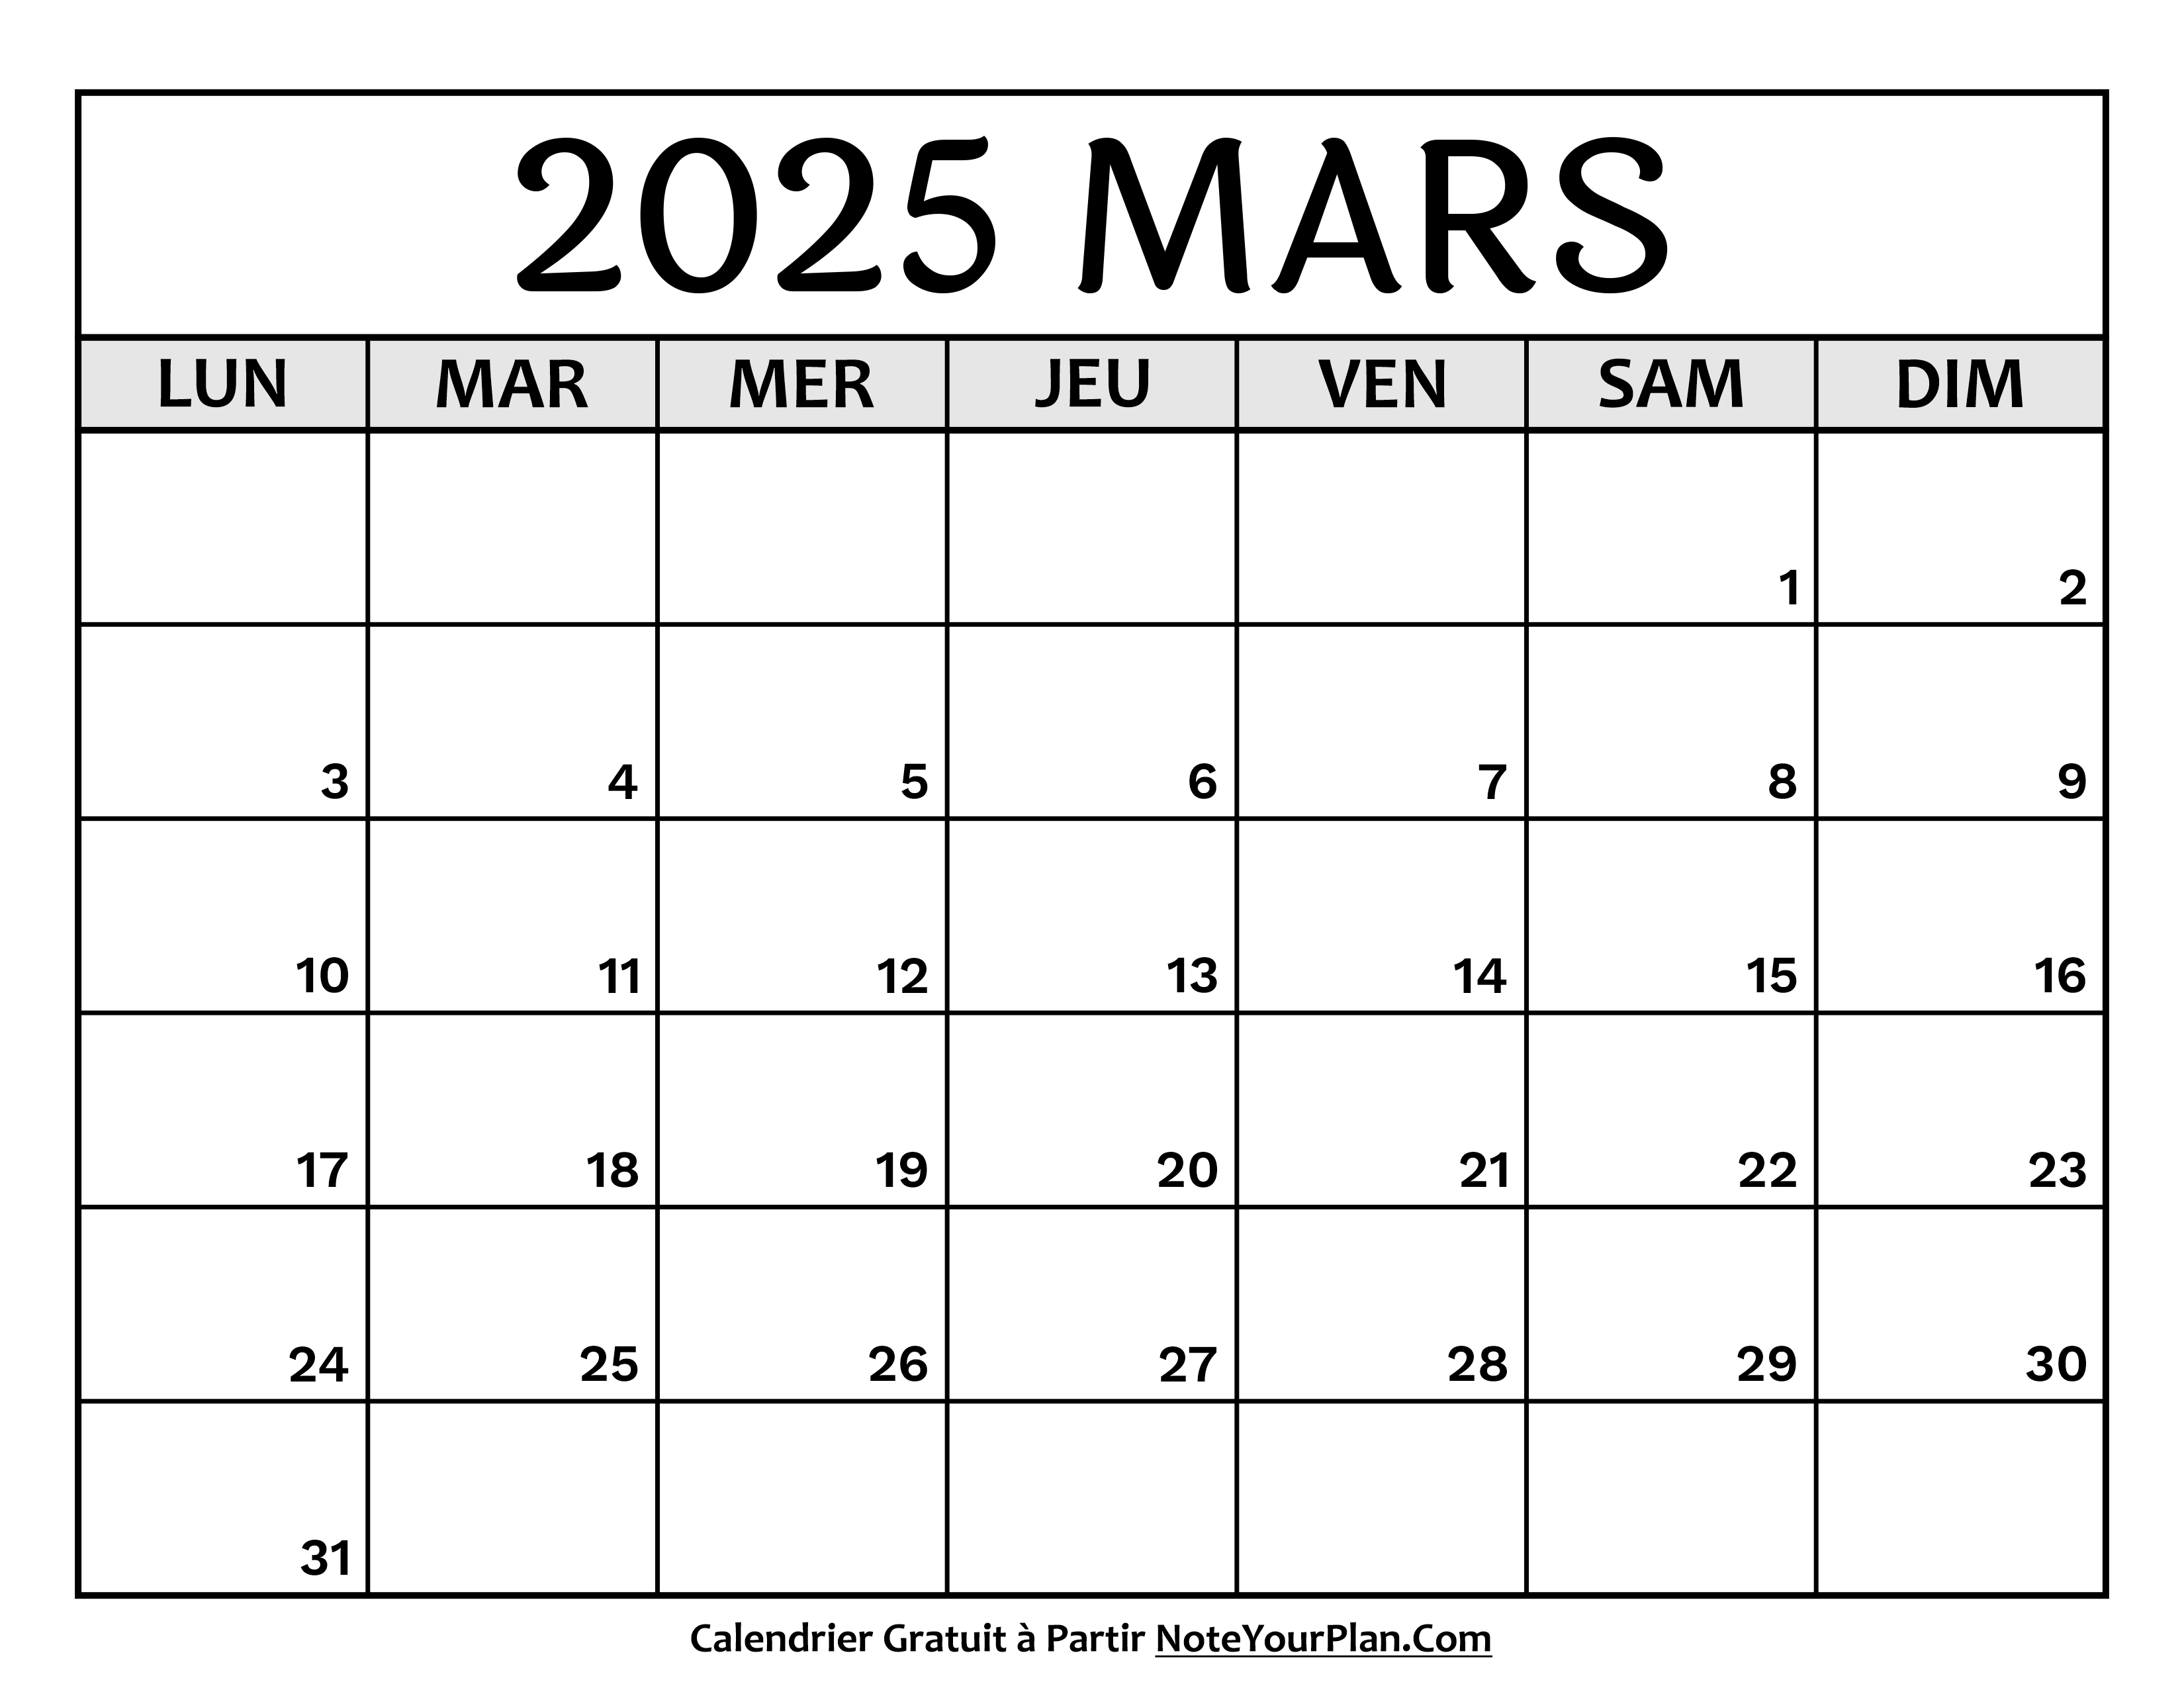 Calendrier Mars 2025 à Imprimer